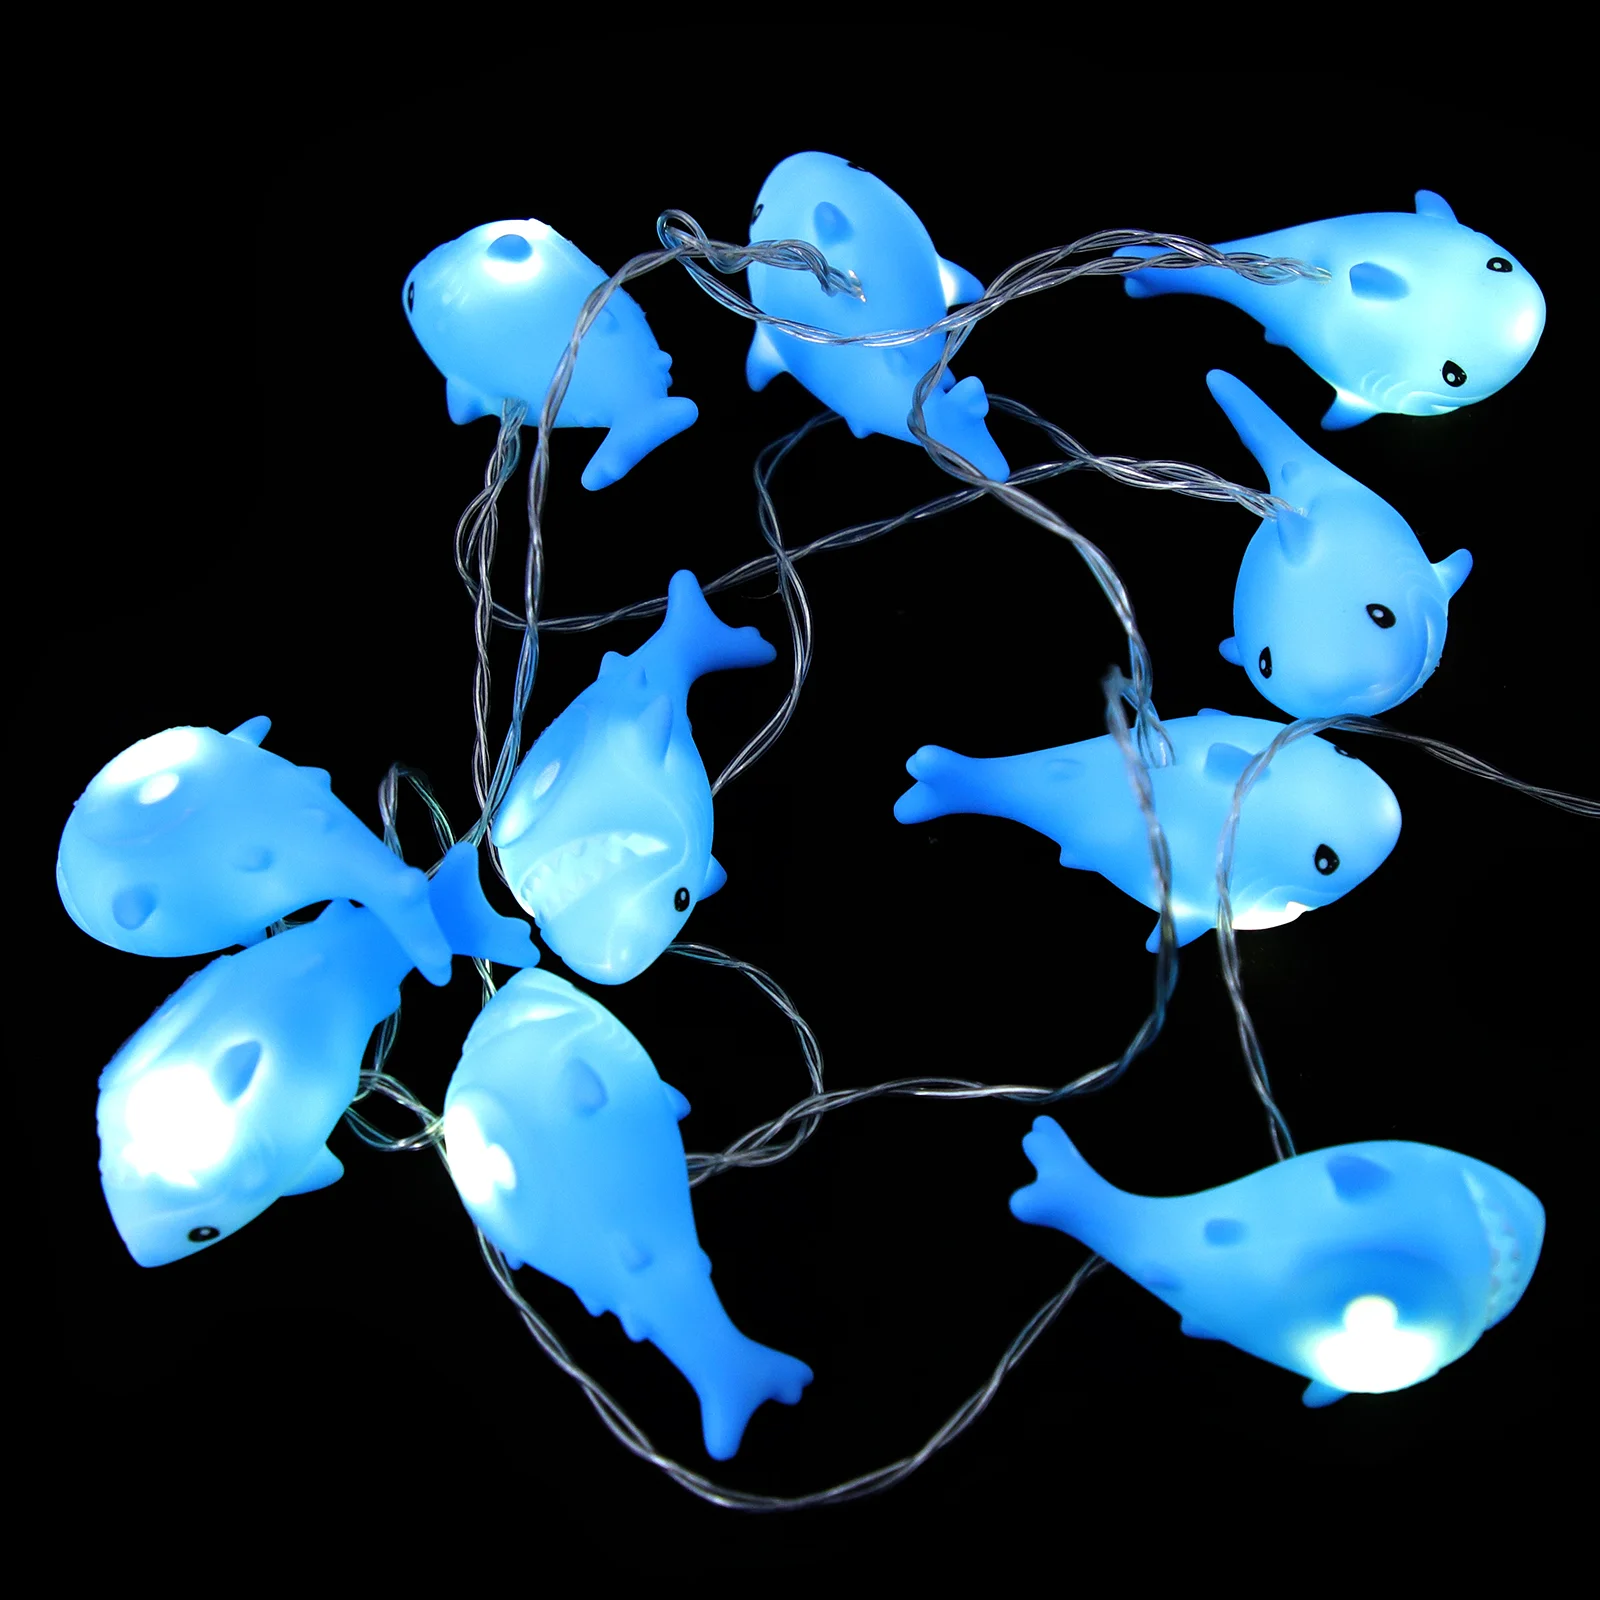 

Shark Light Ornament Festival Elements Lamp Pendant Present Decors Indoor Plastic Hanging Decoration